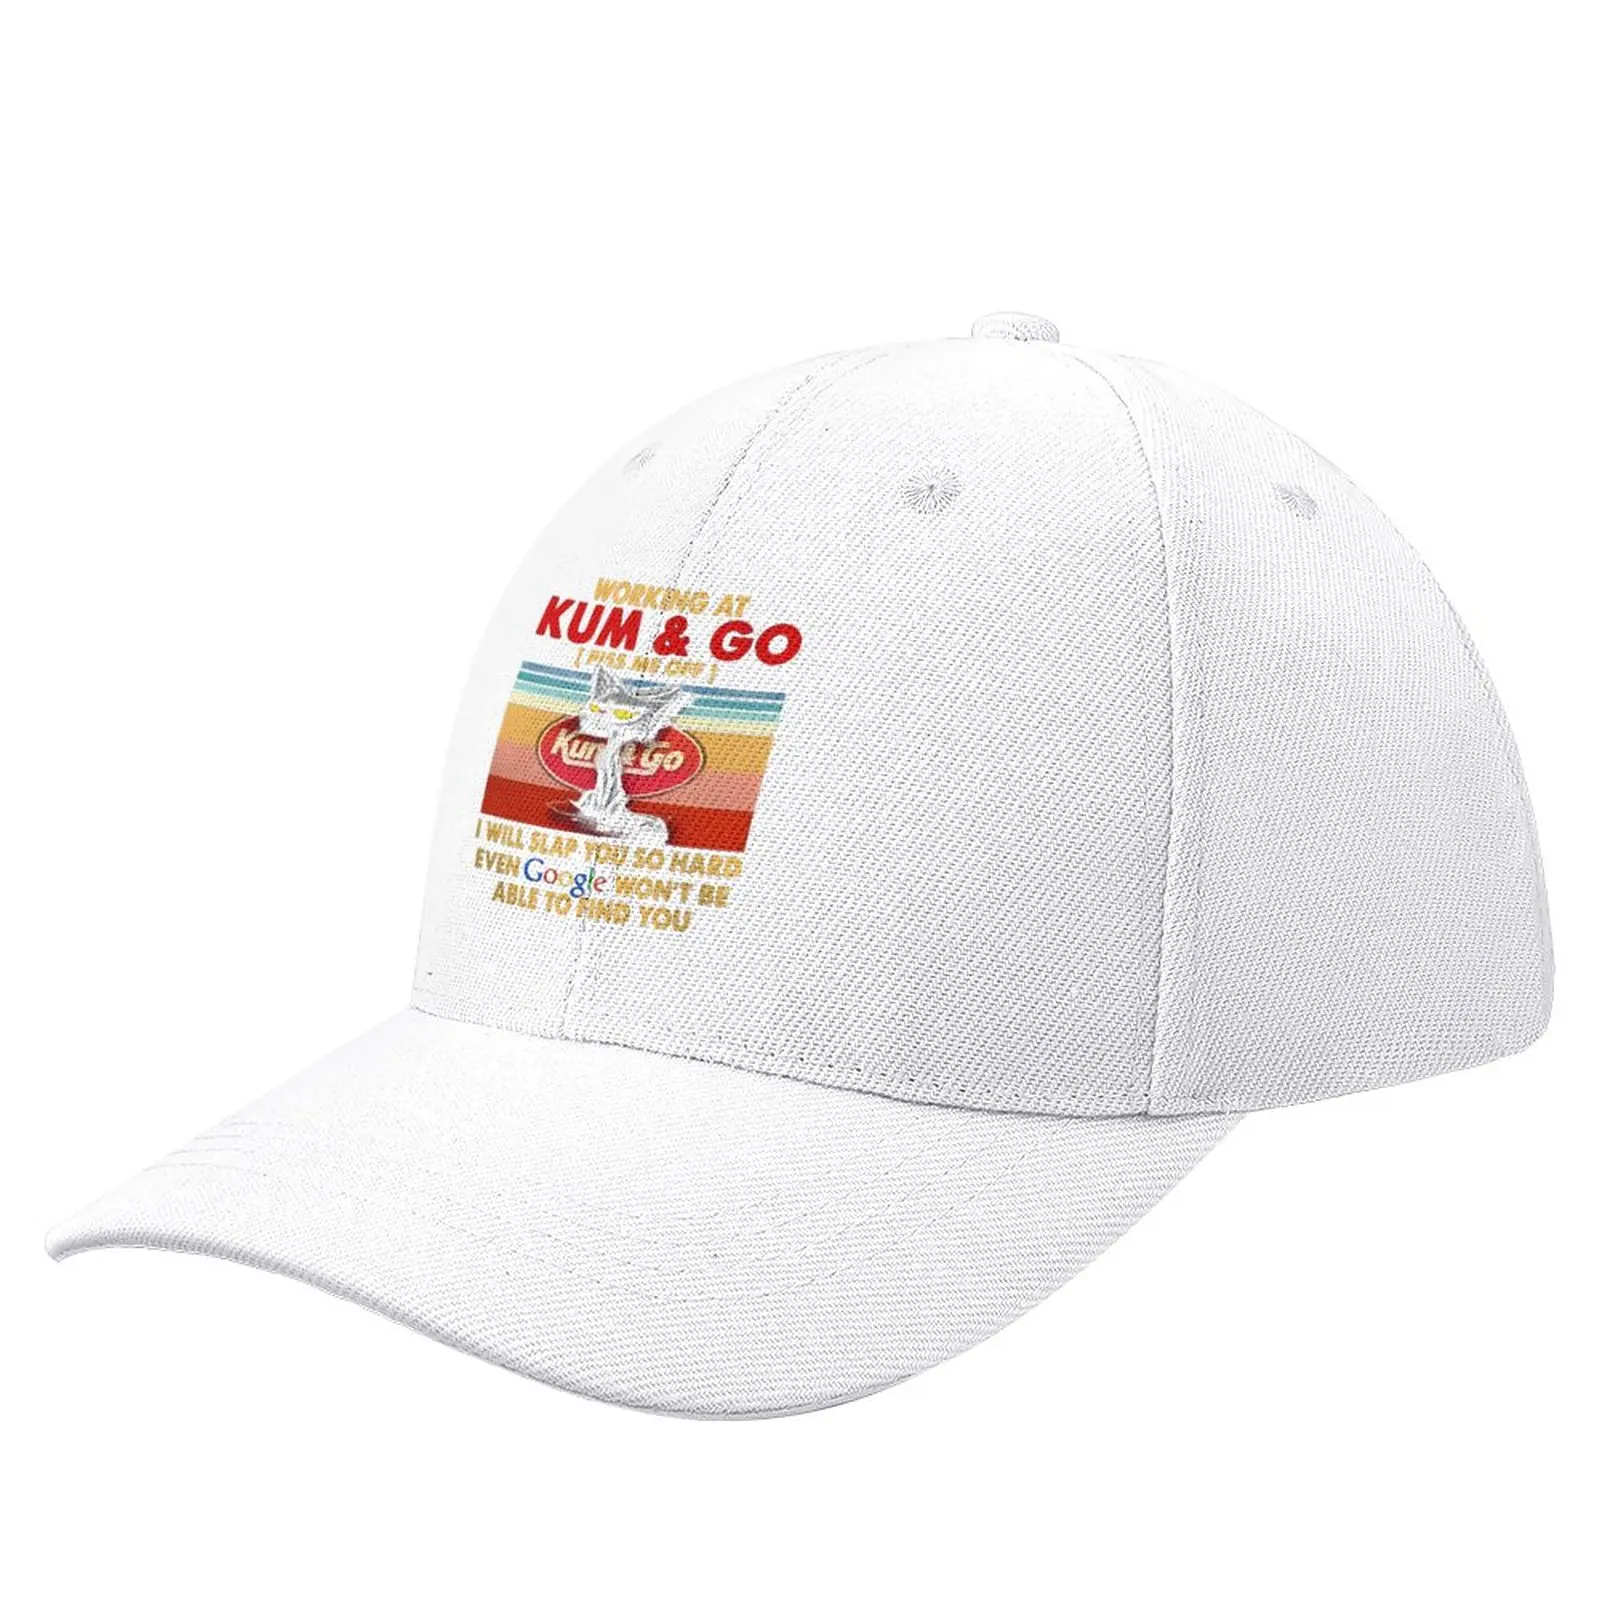 

Working at Kum and Go piss me off Baseball Cap Luxury Cap Vintage Sunhat Sunscreen Hat For Women Men'S